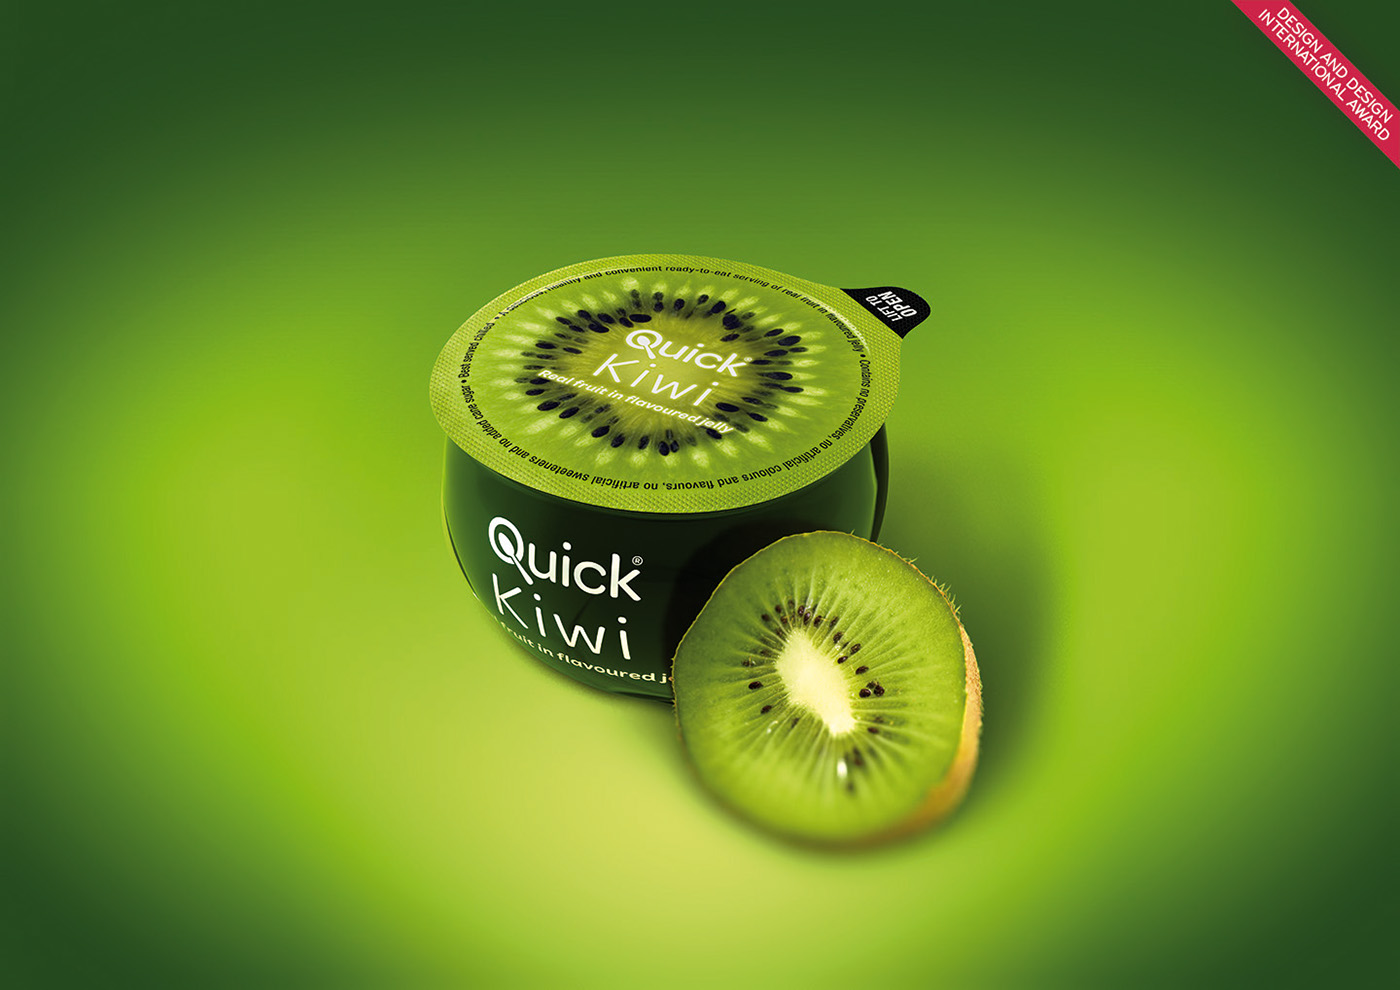 Marcel Buerkle Quick Fruit Quick Kiwi Quick Orange Quick Guava Quick packaging packaging design concept 3D renders johannesburg south africa